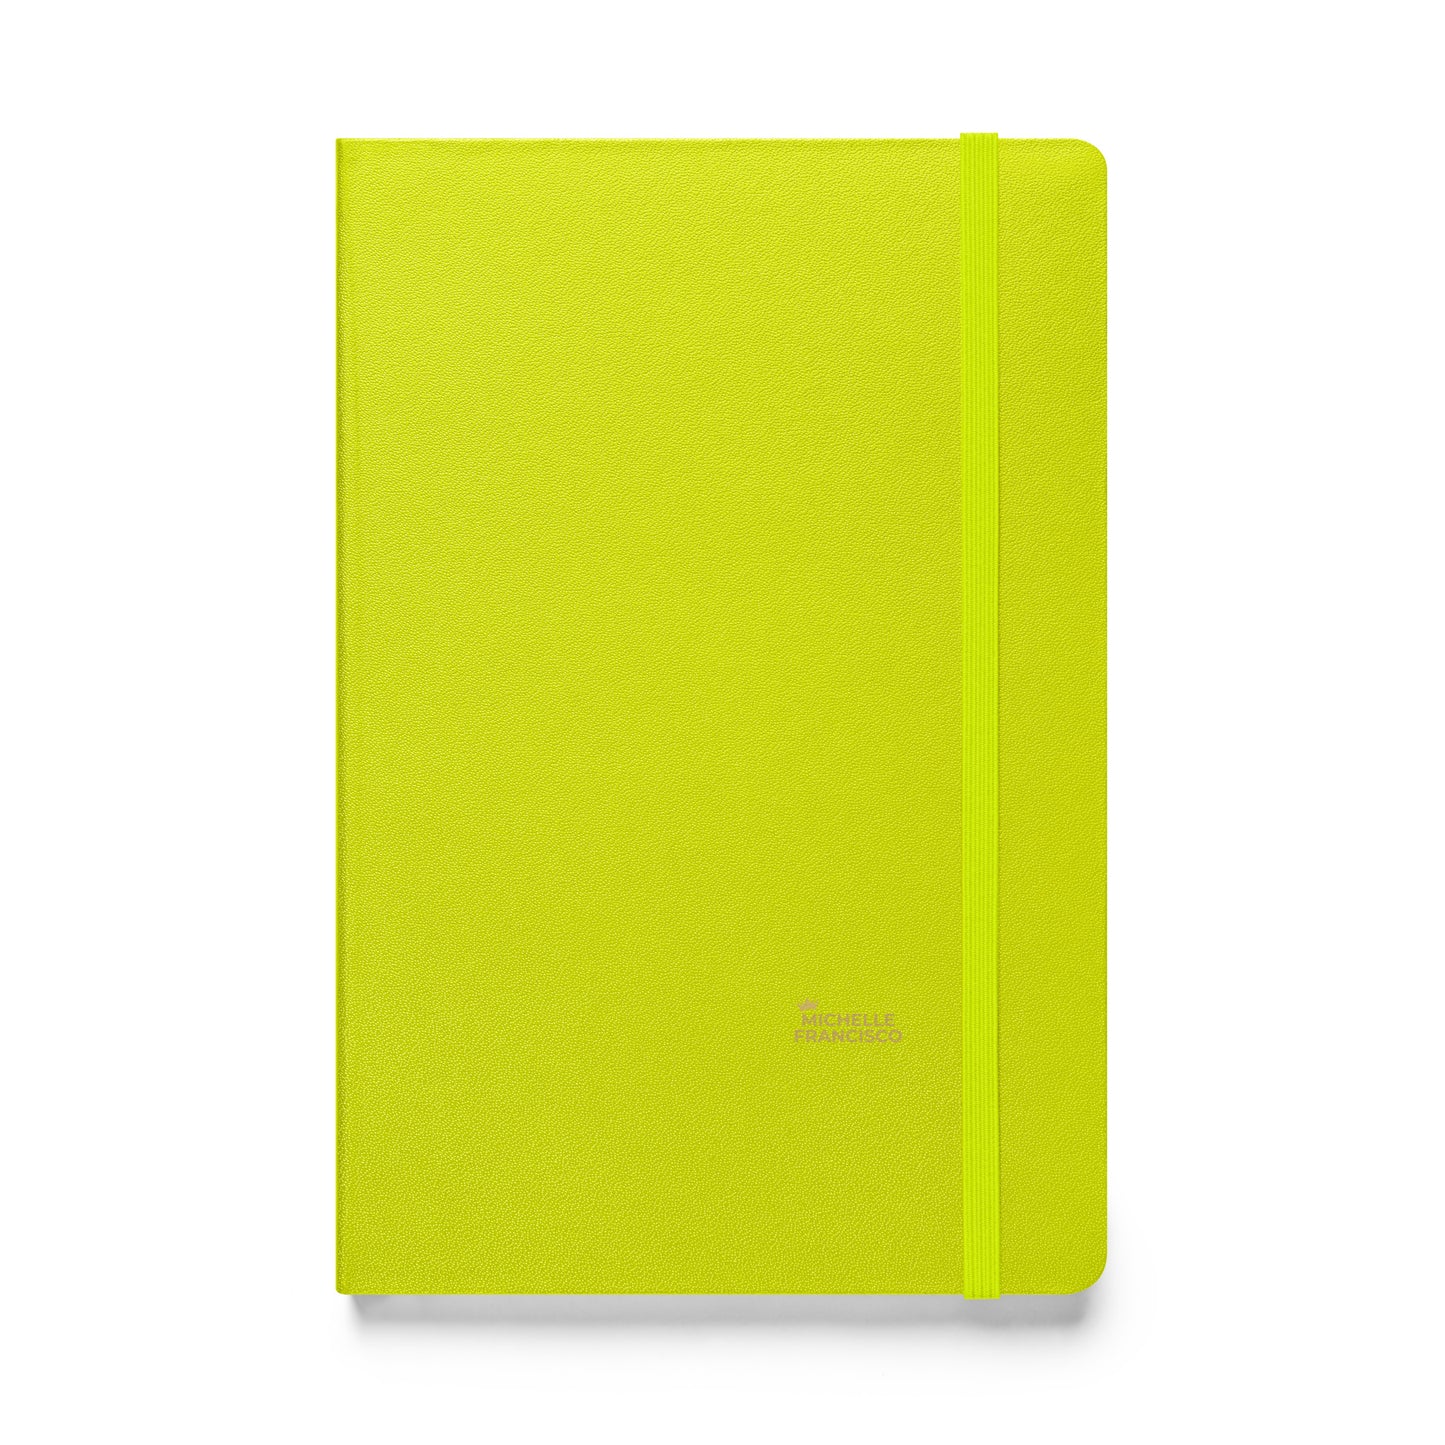 Michelle Francisco Hardcover Bound Notebook